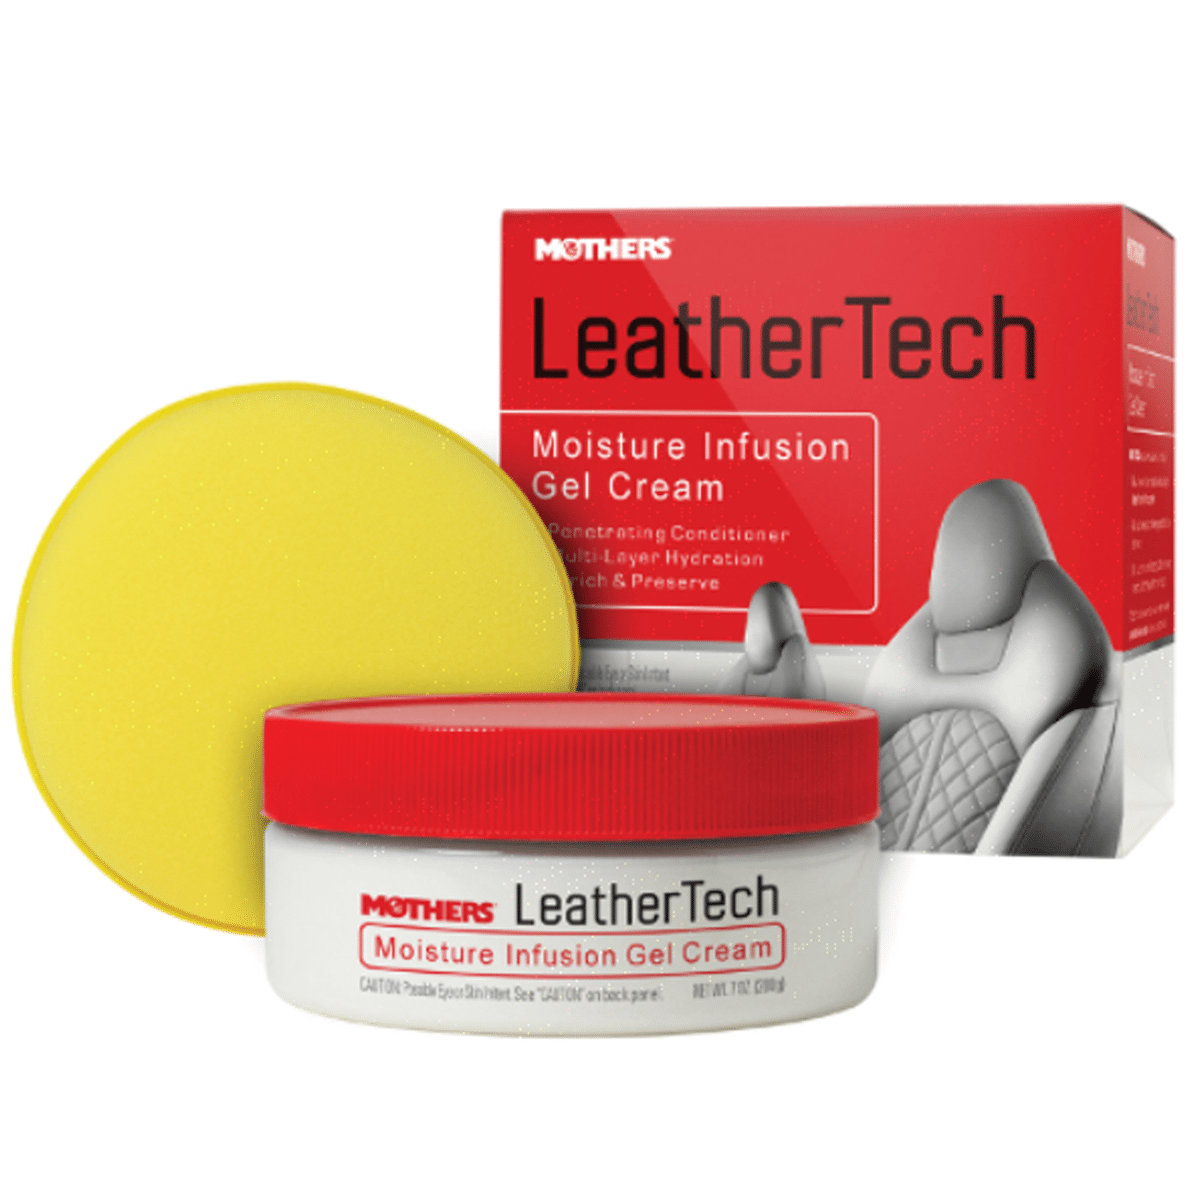 MOTHERS Leather Tech Moisture Infusion Gel Cream 200ml Preparat do Konserwacji Skór Matowych